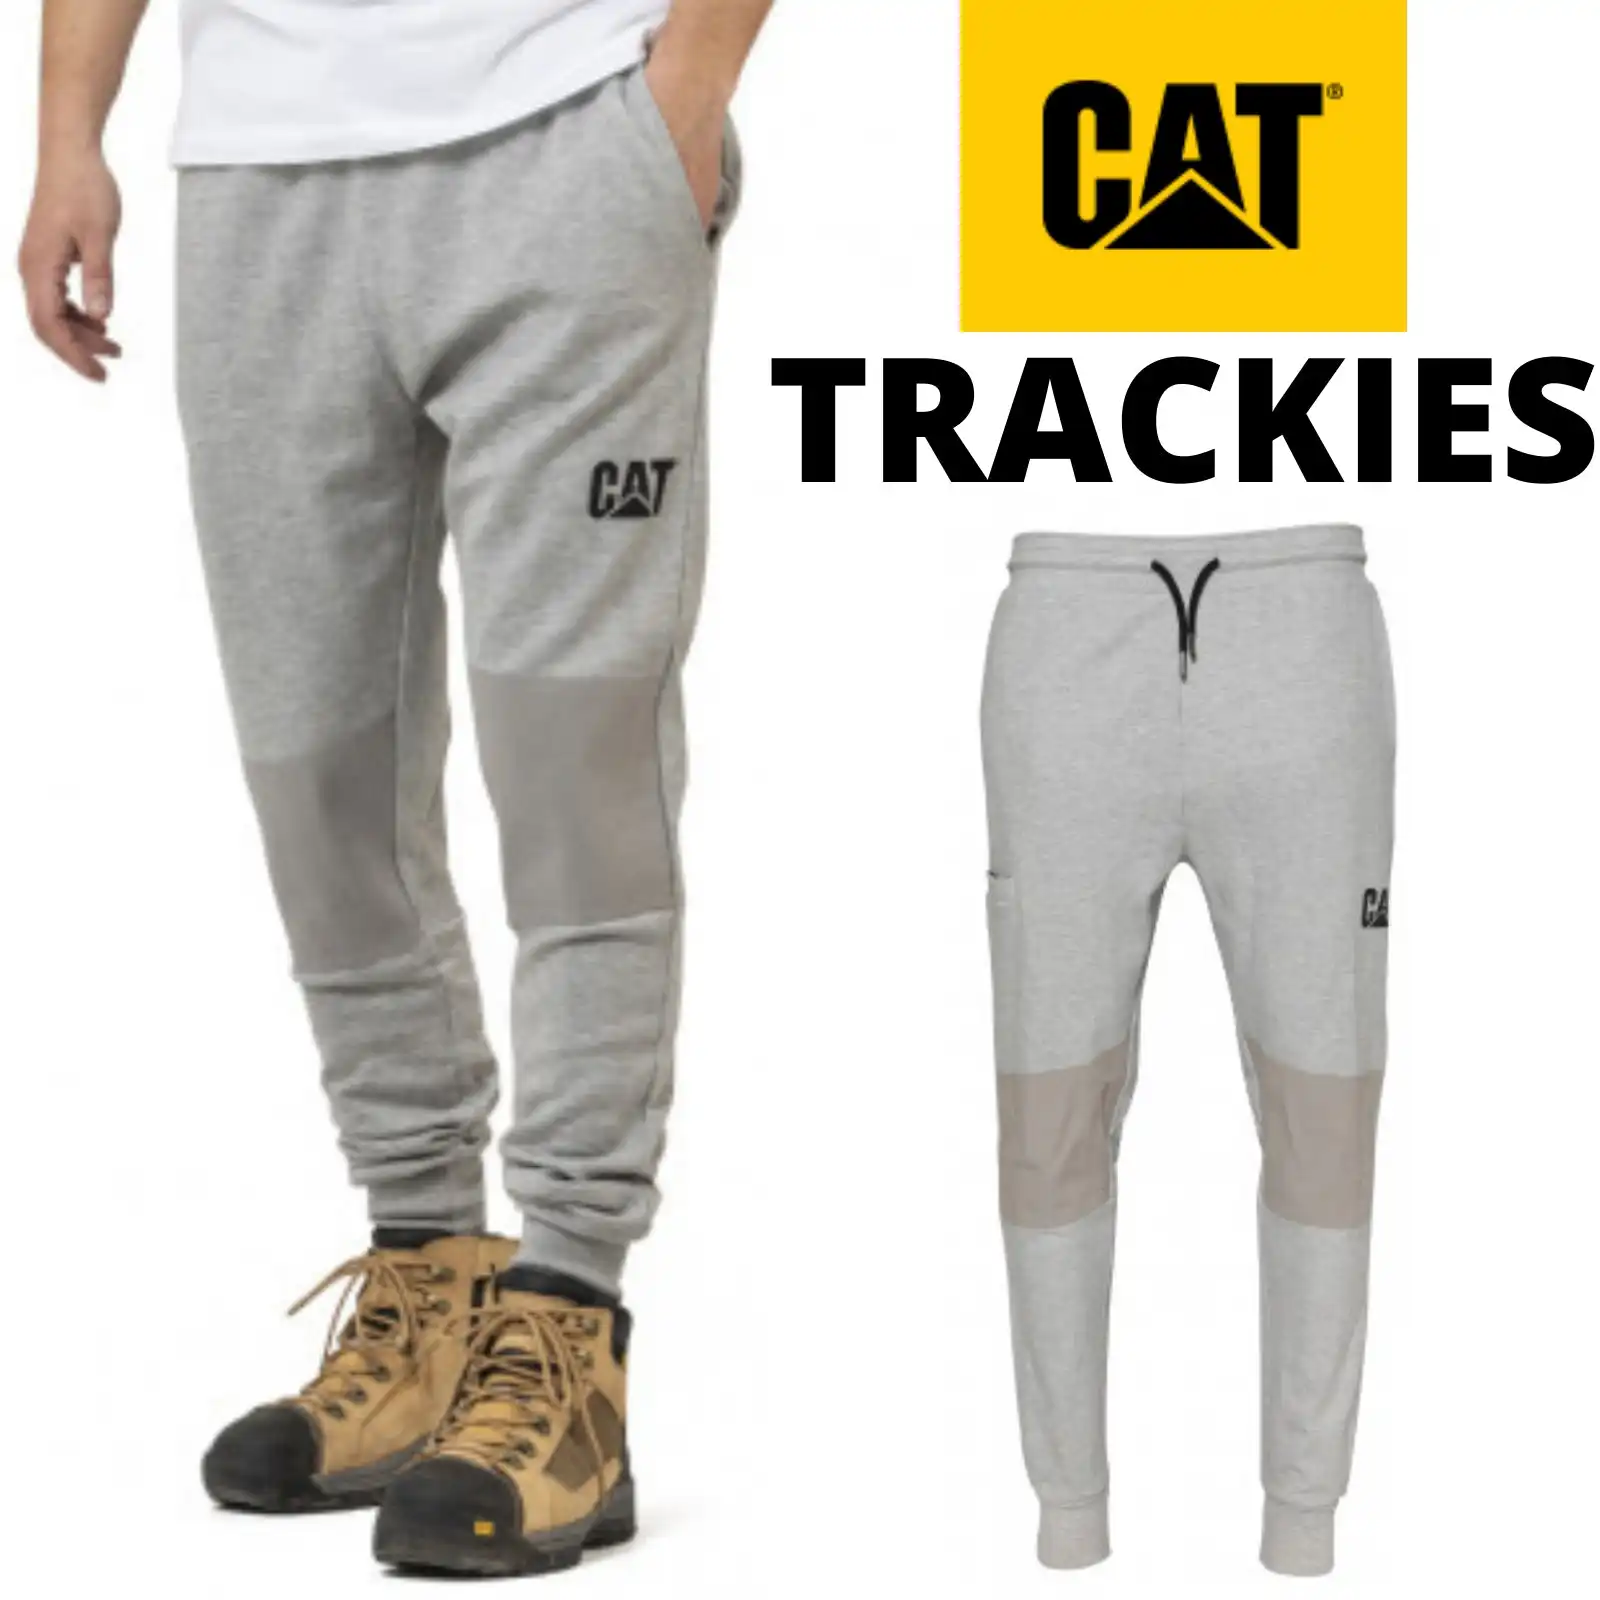 Caterpillar Track Pants Trackies Work Casual Gym Slim Fit w Hem Joggers - Grey